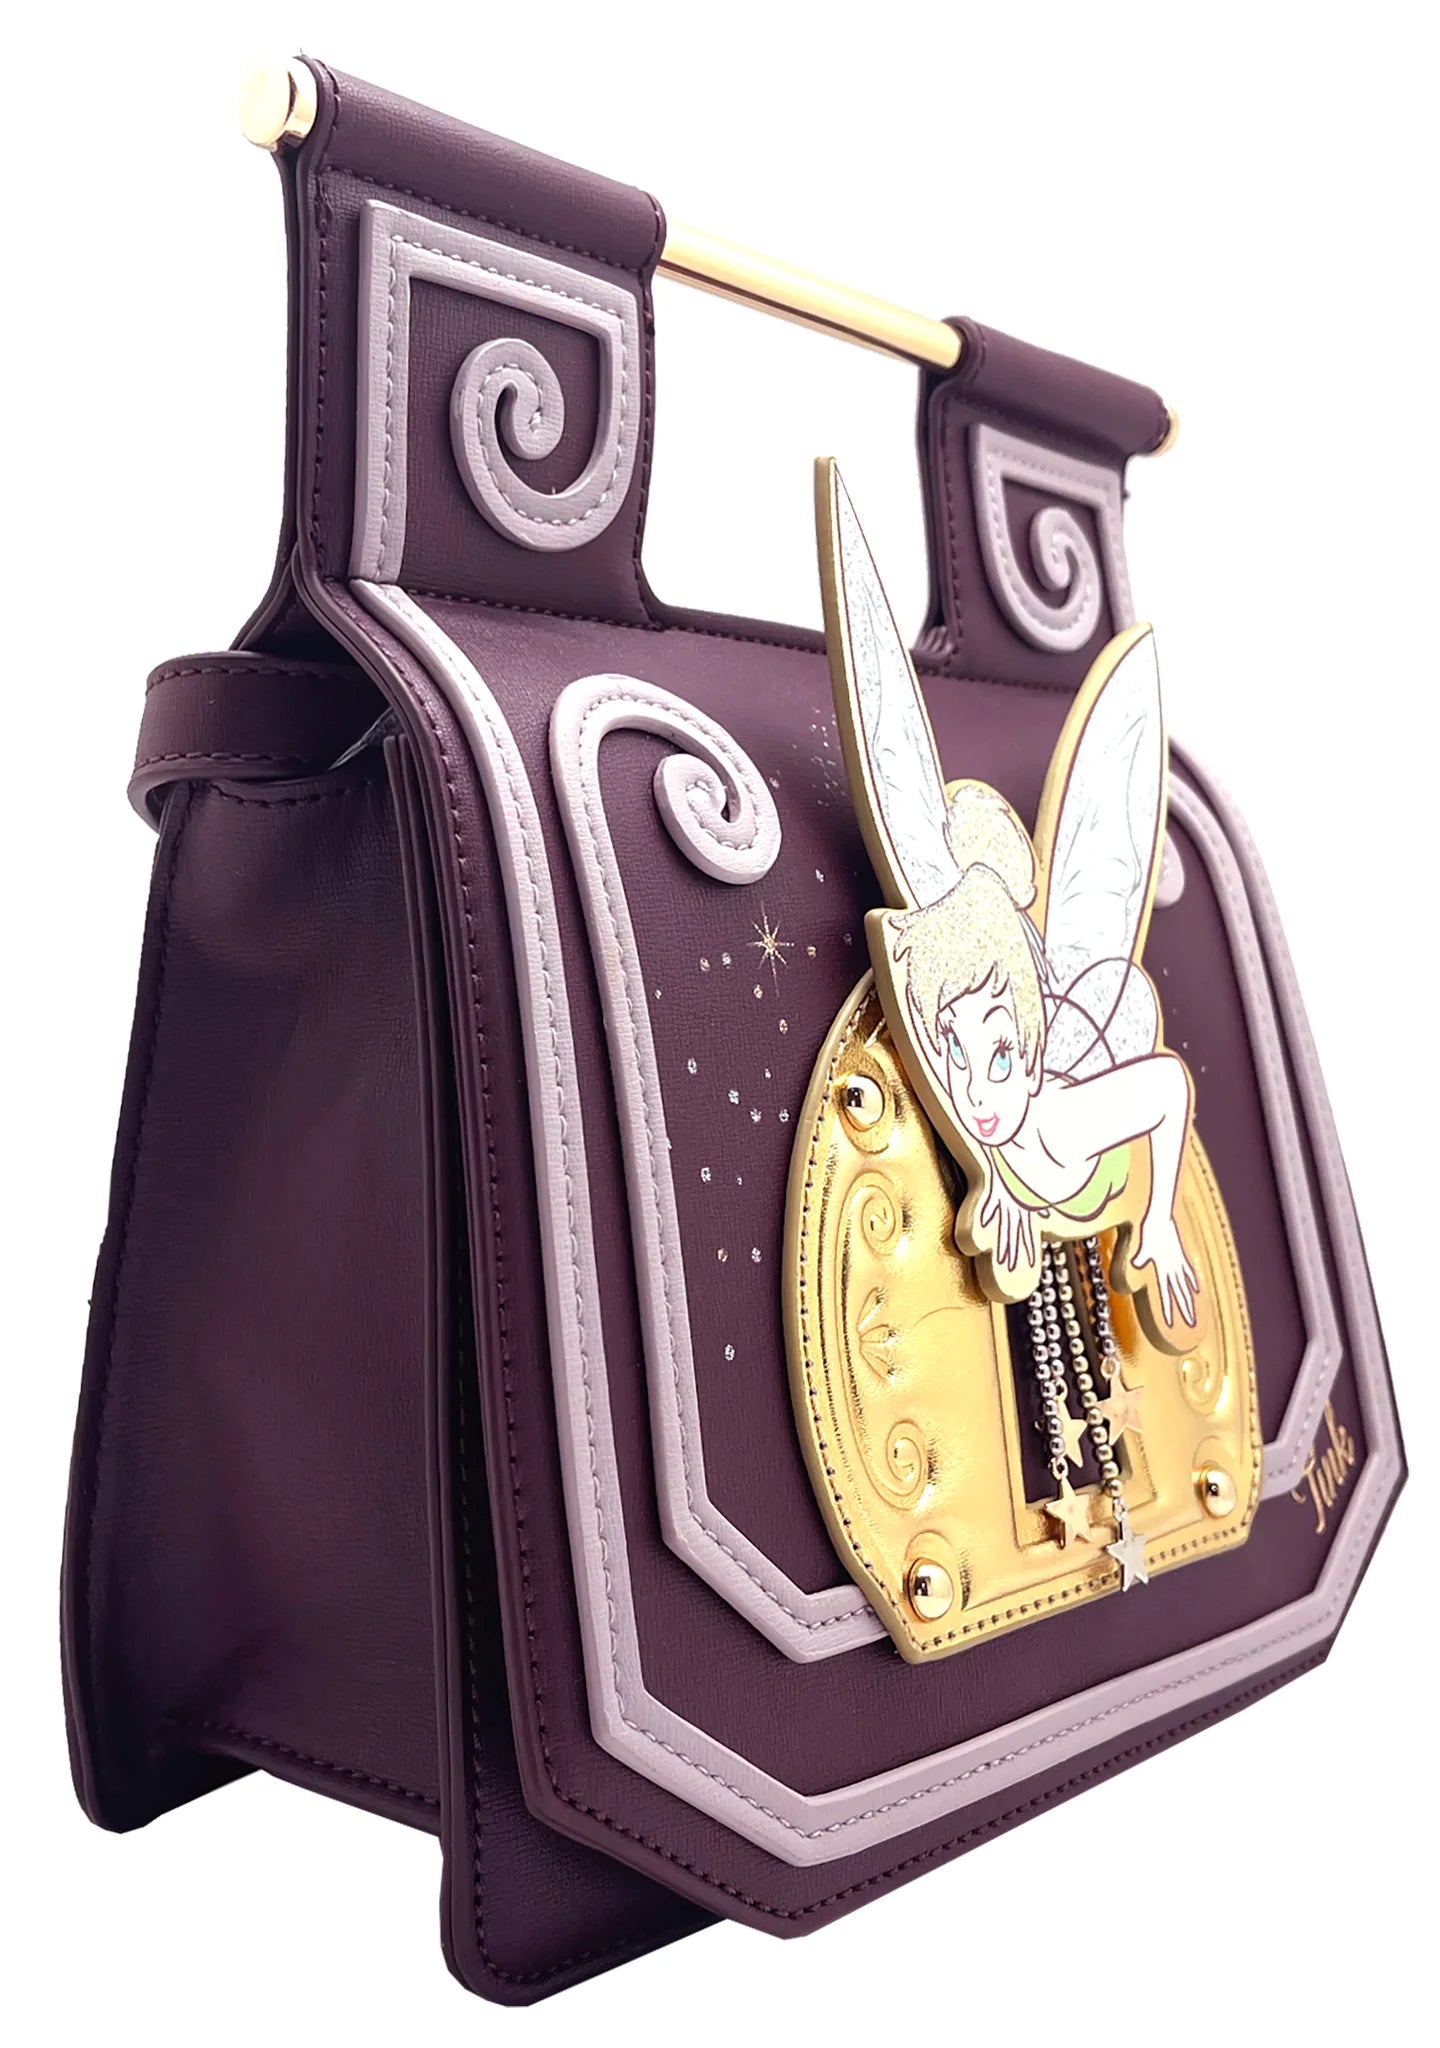 New Disney Villain Handbag Collection from Danielle Nicole